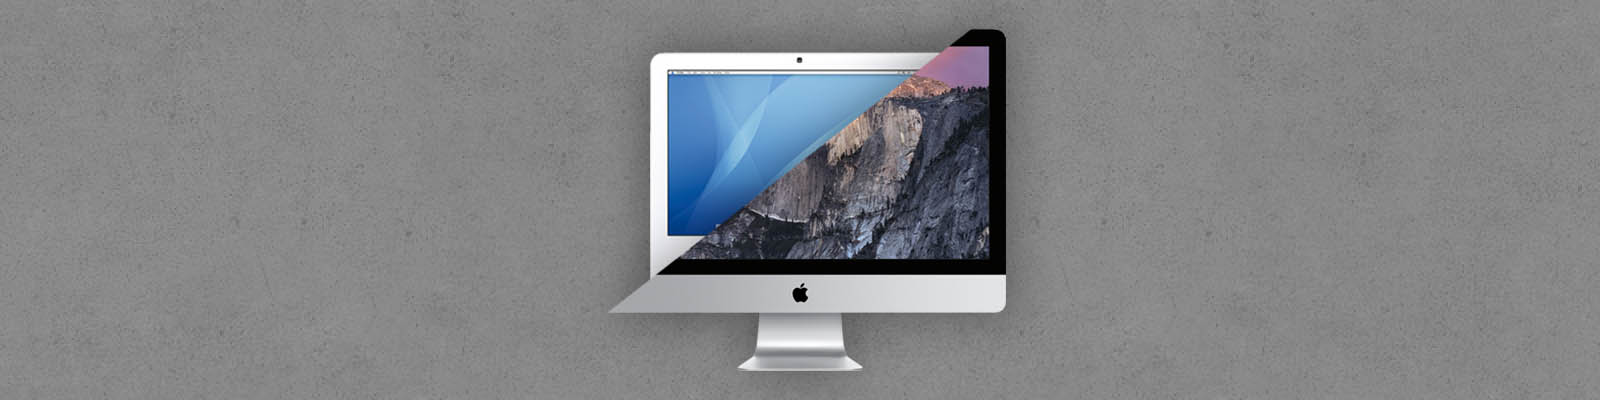 Virtualising an old Mac